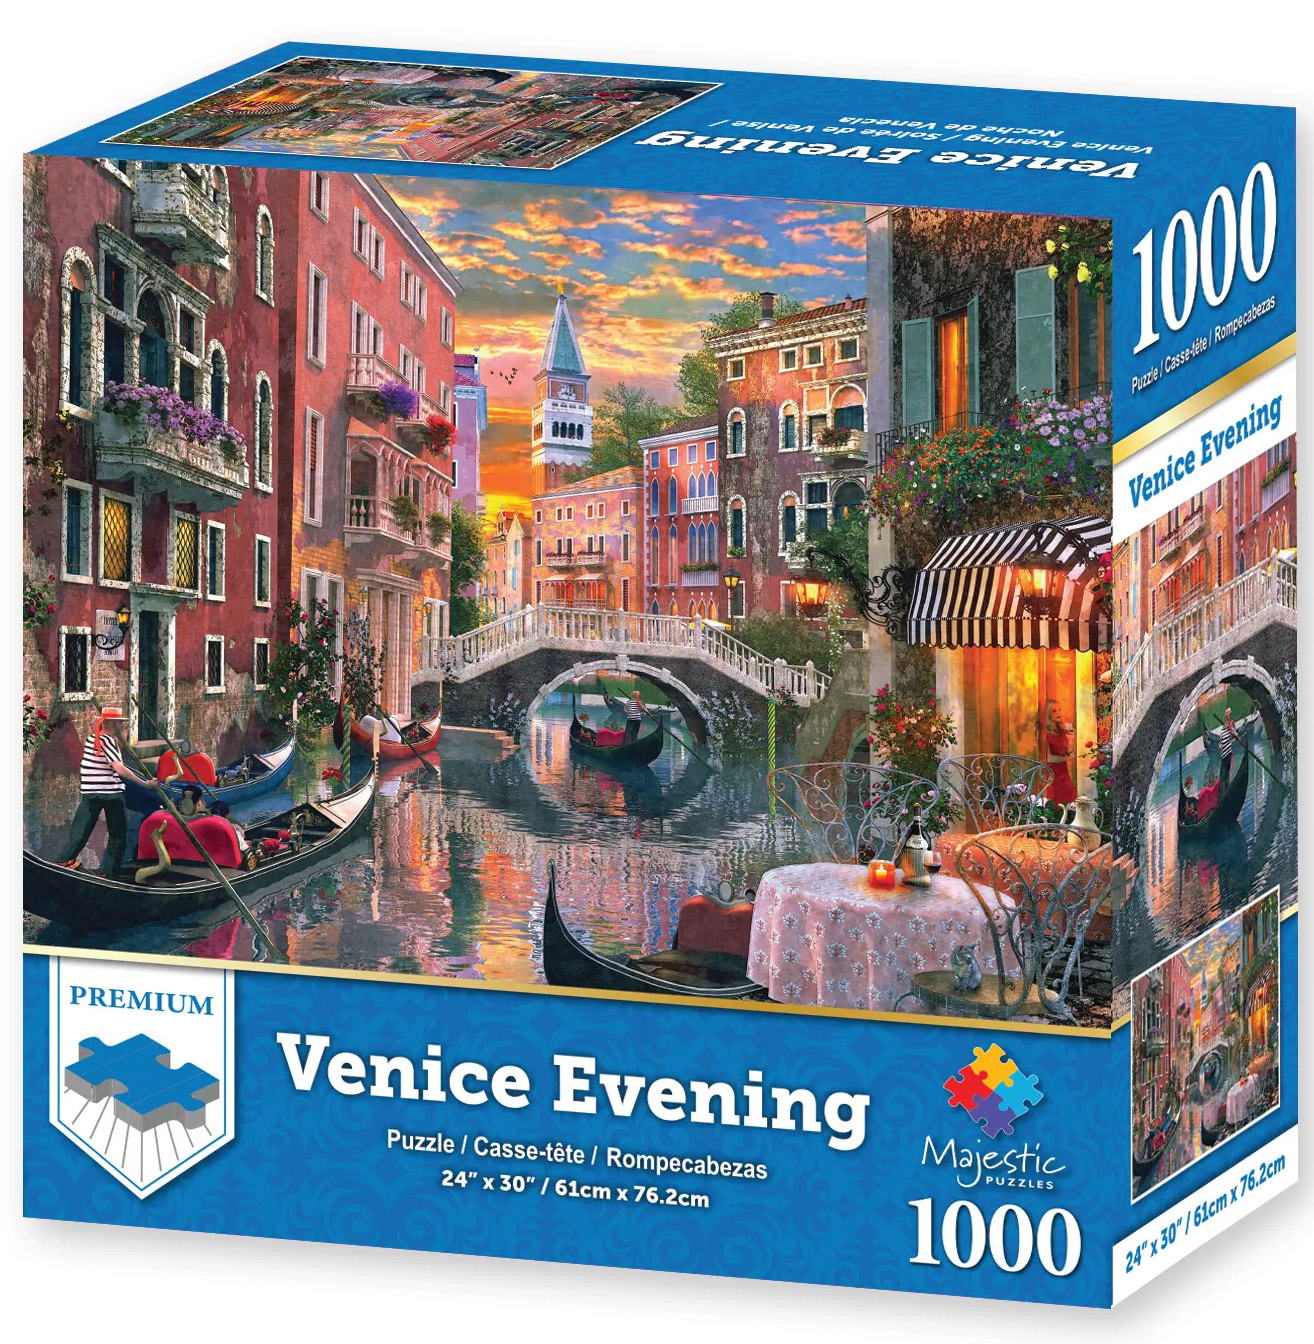 Venice Evening